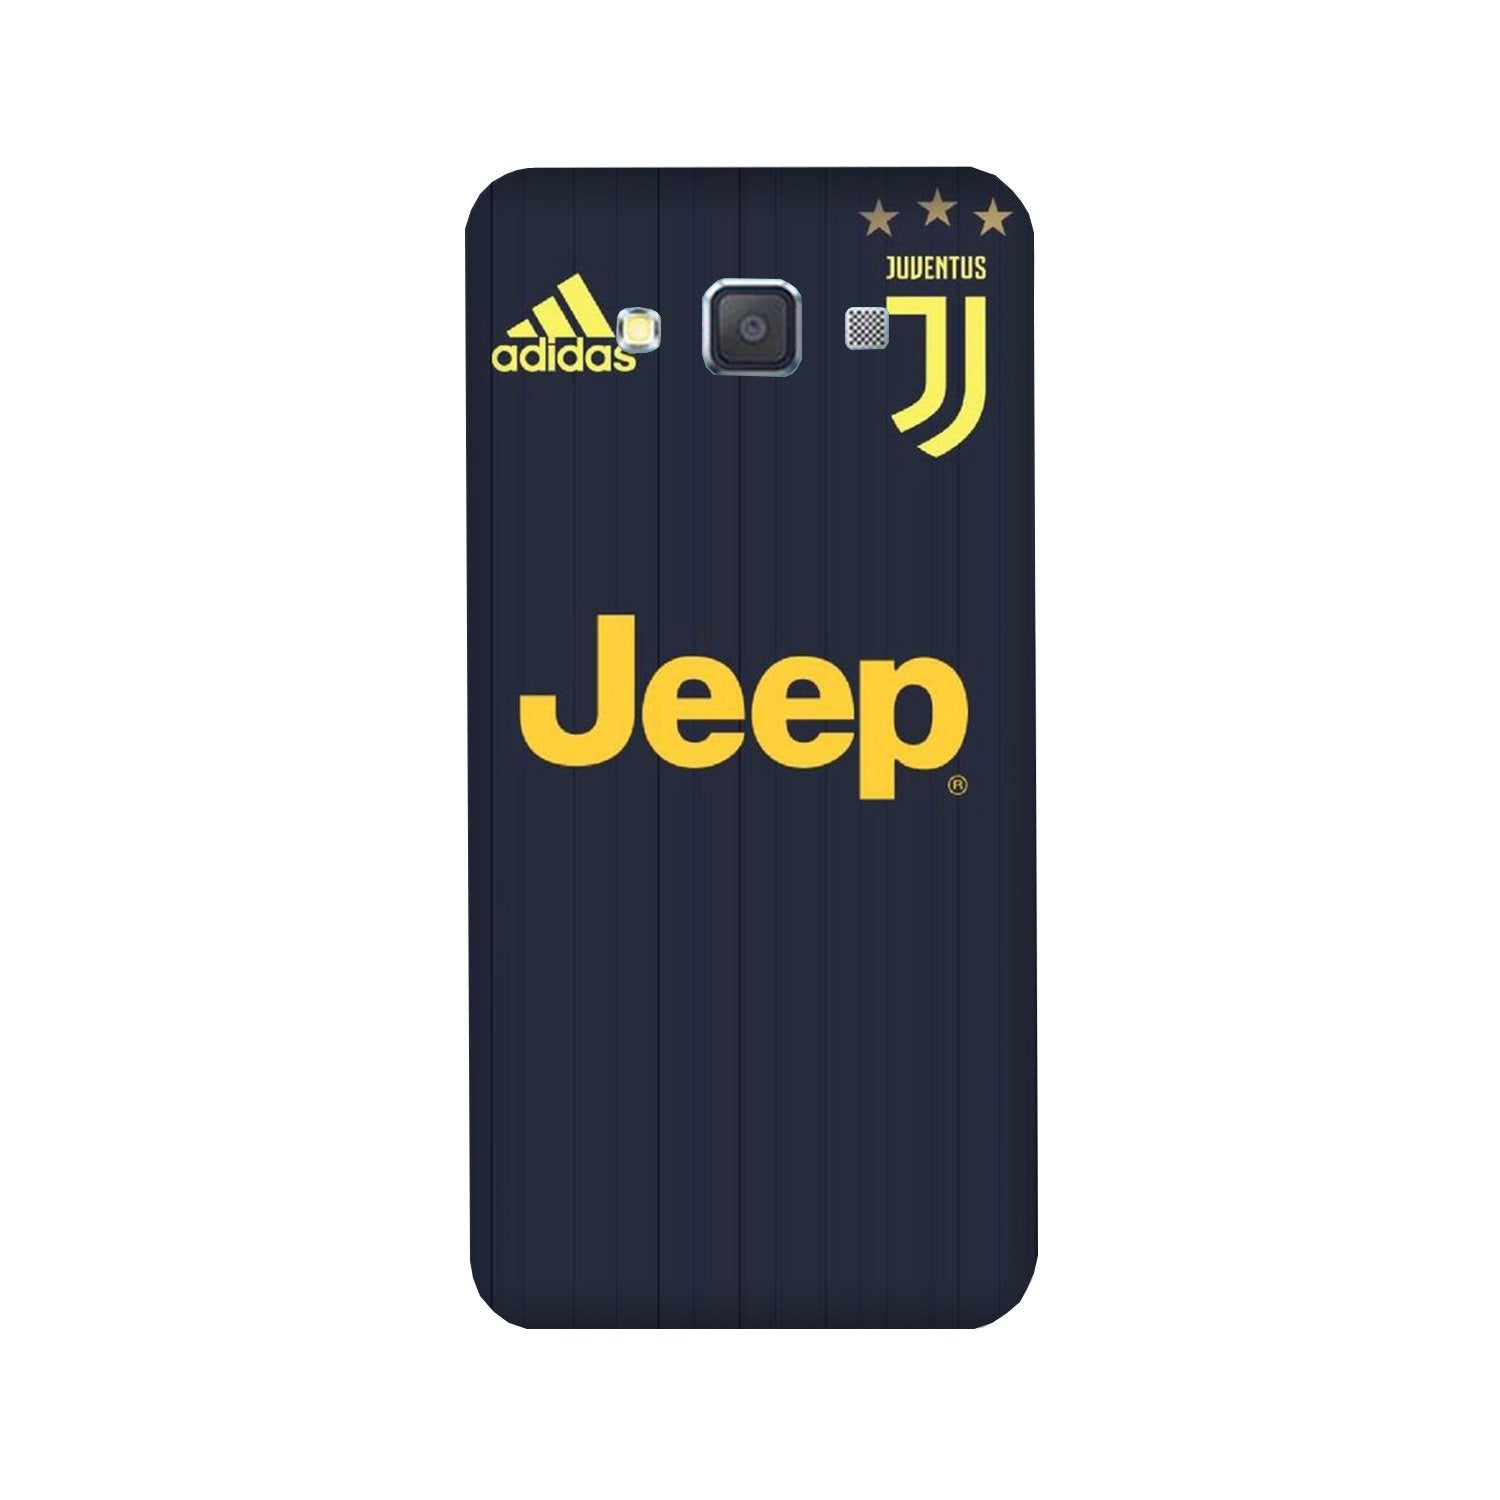 Jeep Juventus Case for Galaxy A3 (2015)(Design - 161)